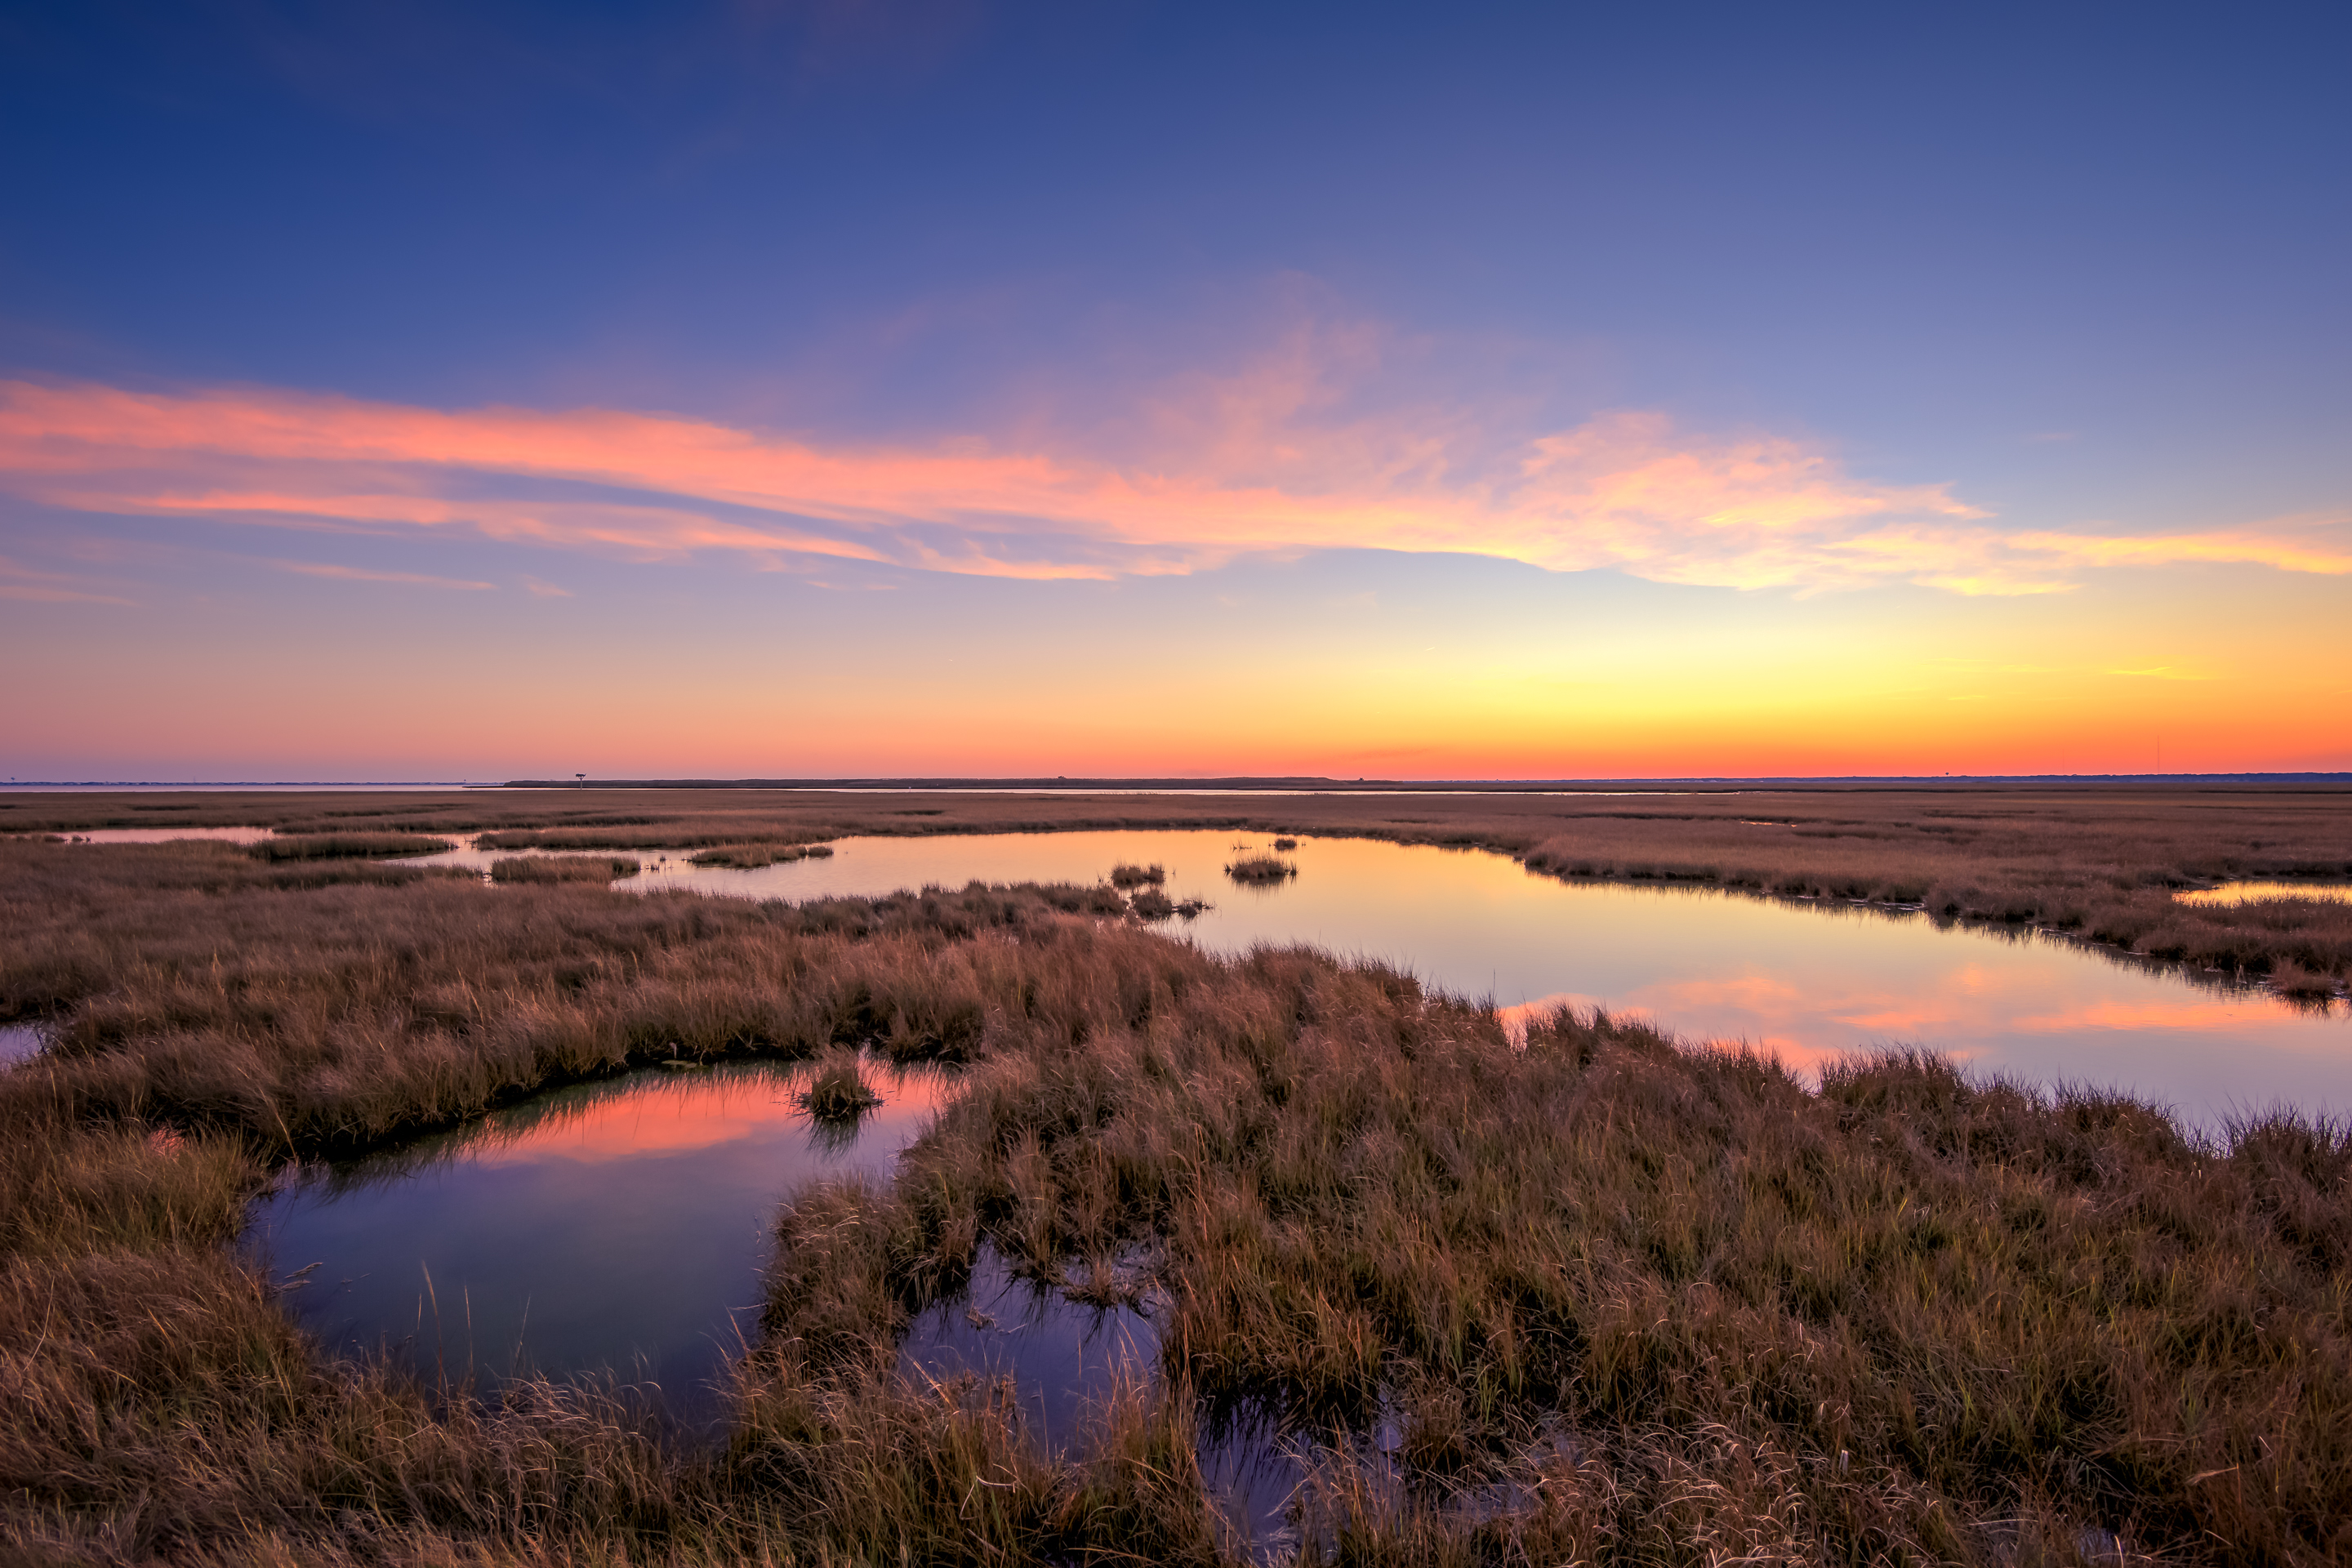 Salt marsh sunset photo in late fall.